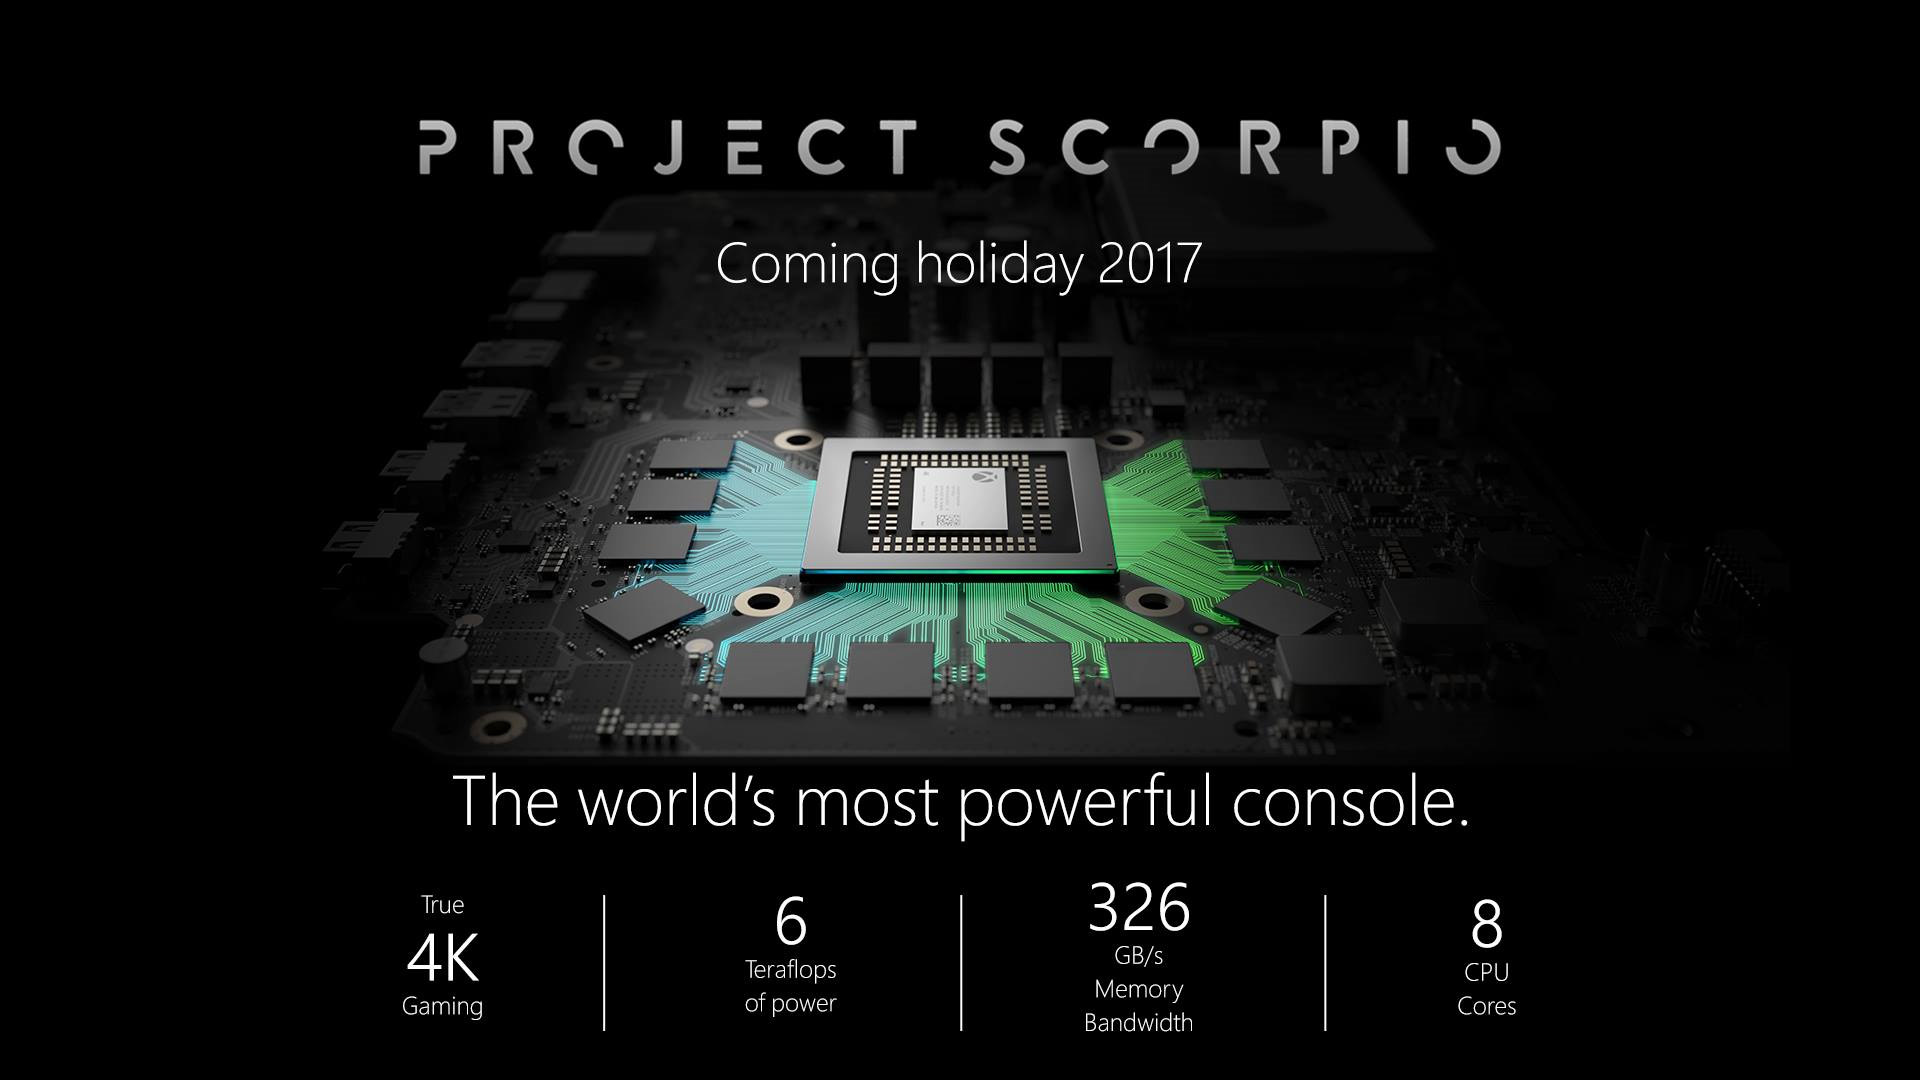 Xbox Scorpio Just the Specs